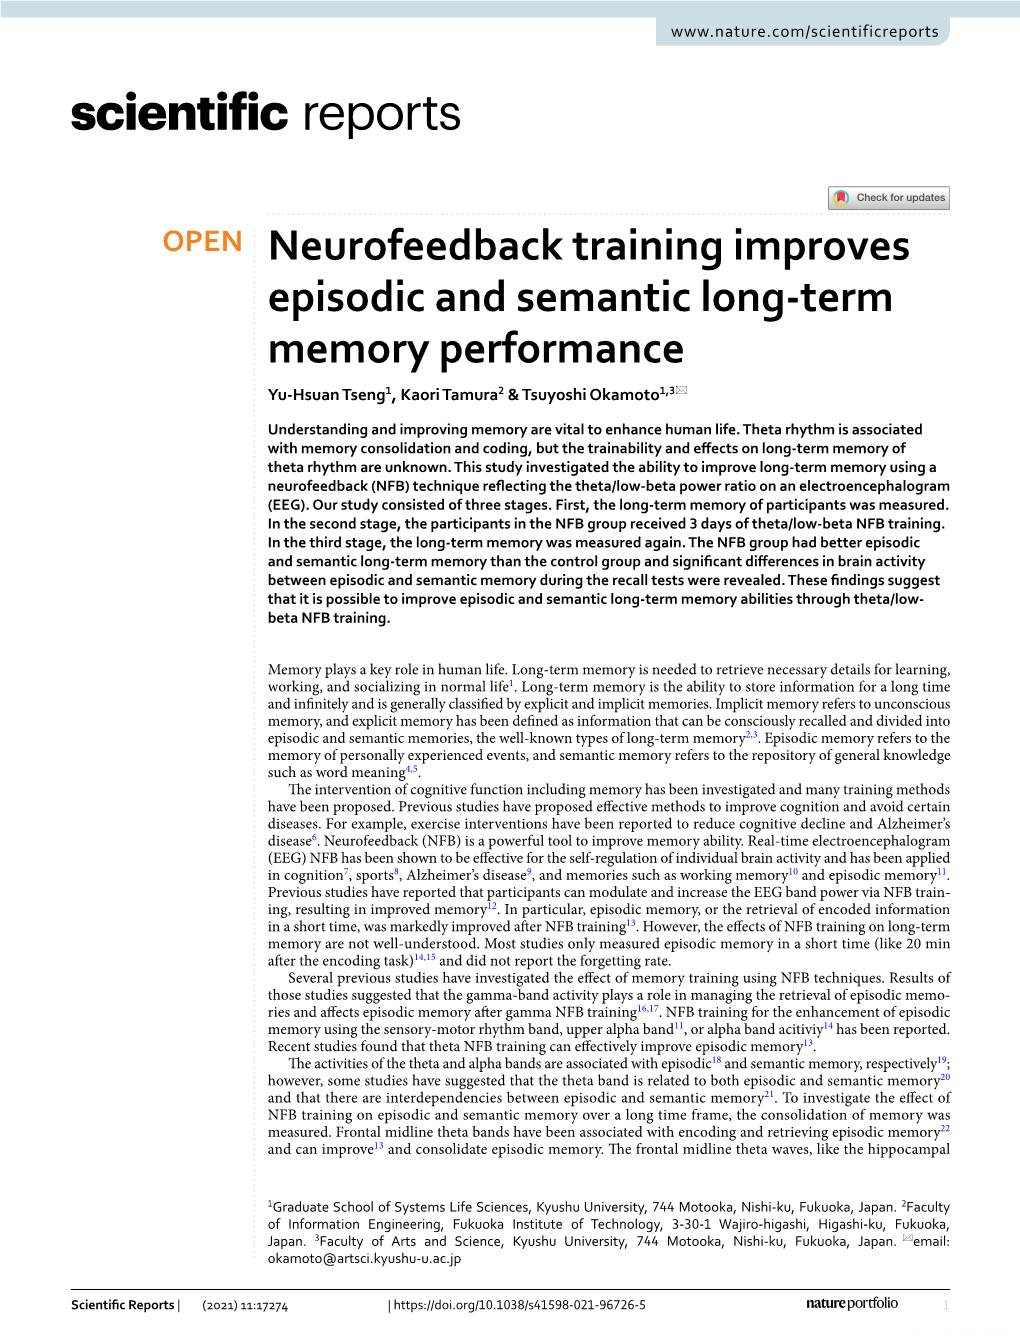 Neurofeedback Training Improves Episodic and Semantic Long-Term